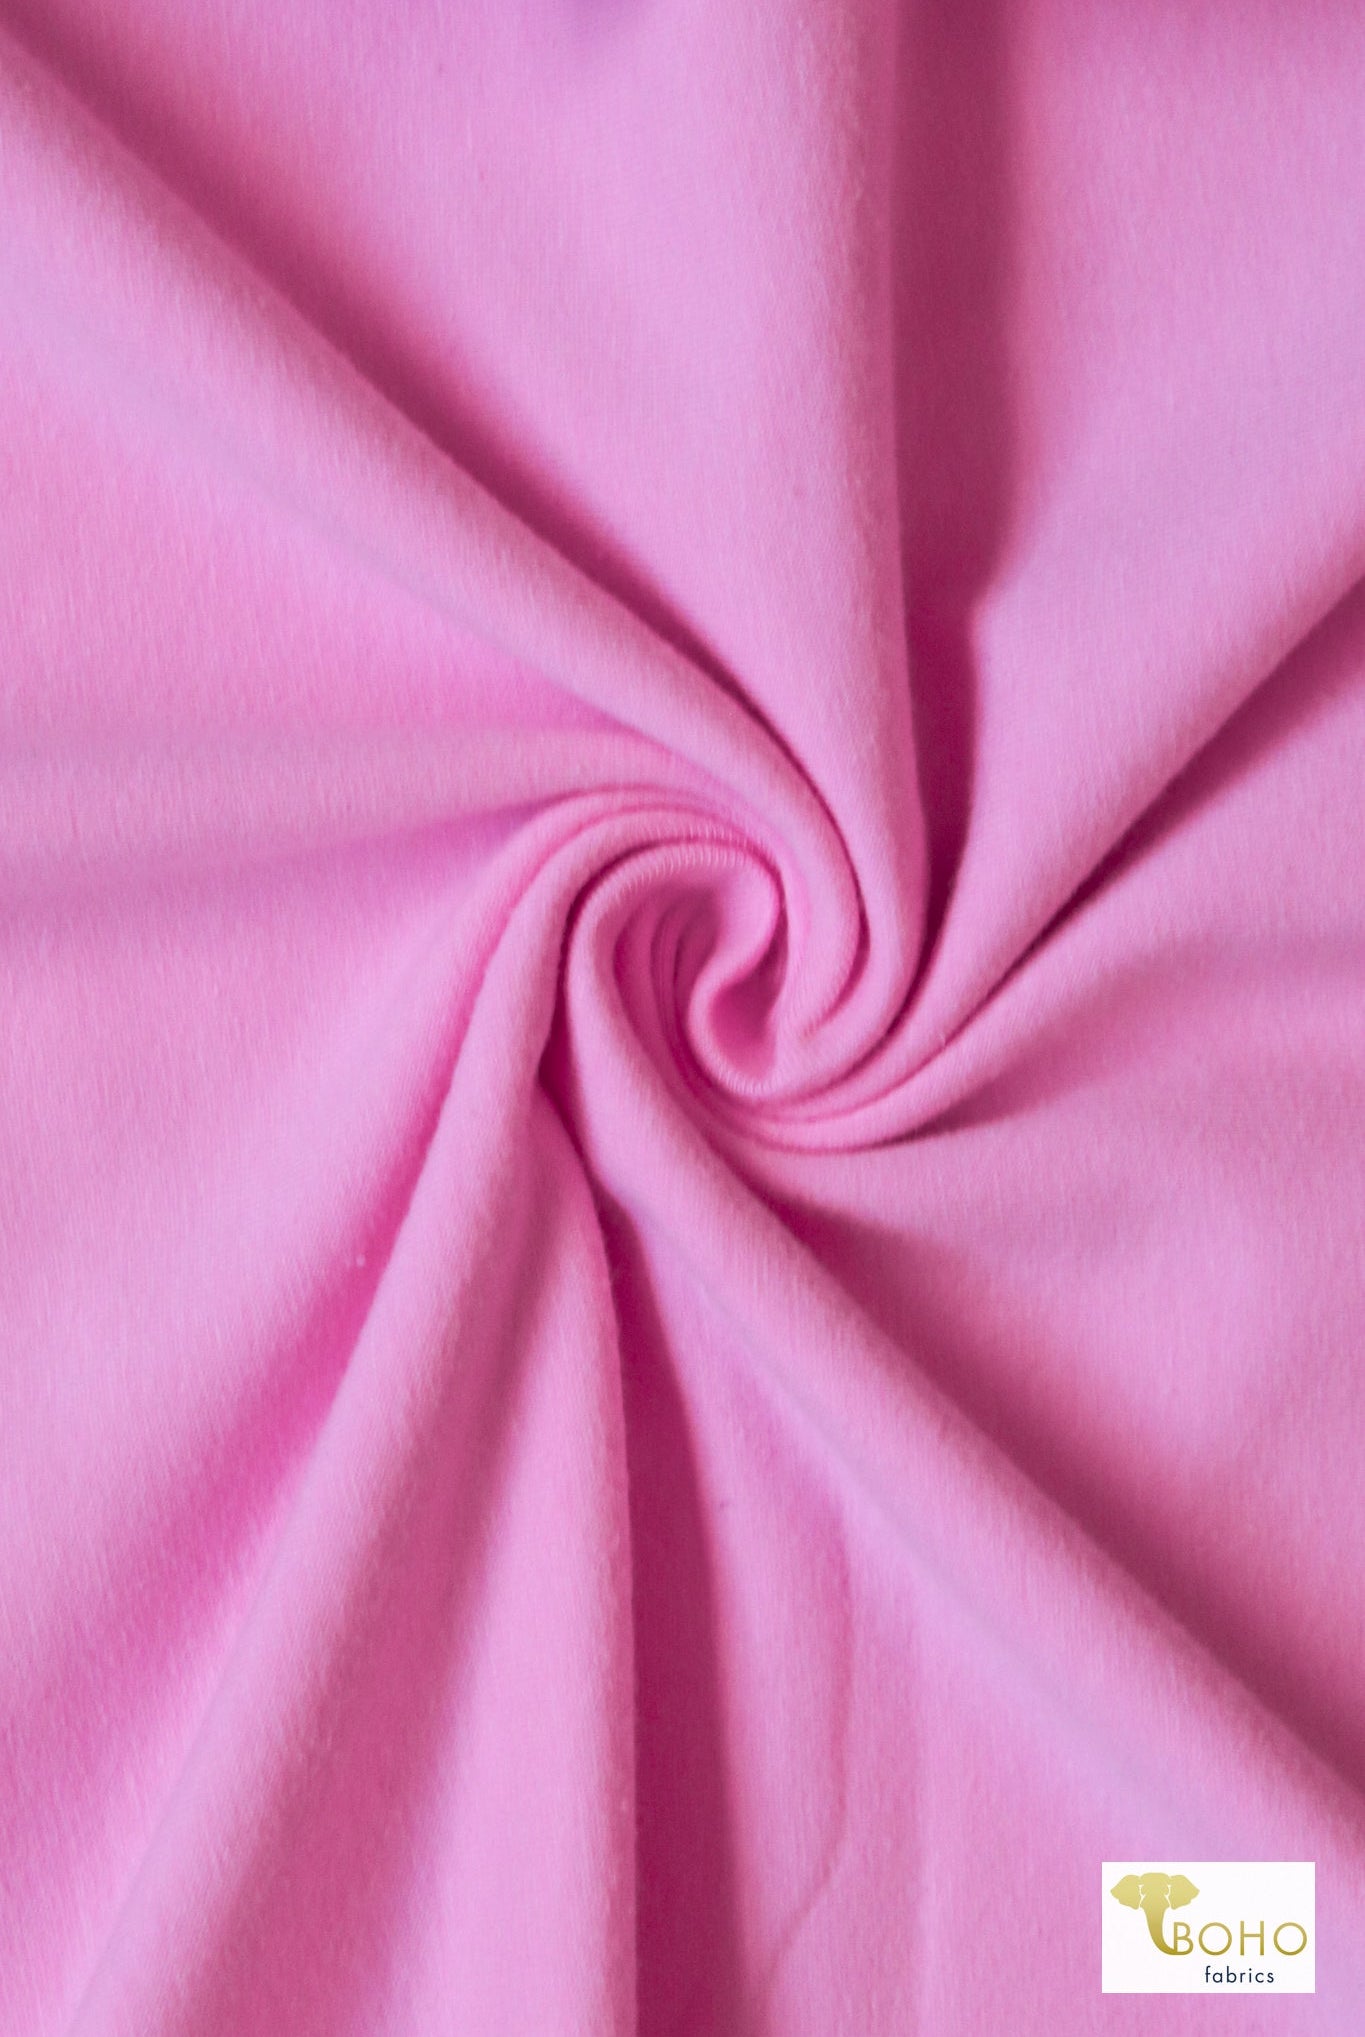 Fairy Tale Pink, Cotton Spandex Knit, 10 oz. - Boho Fabrics